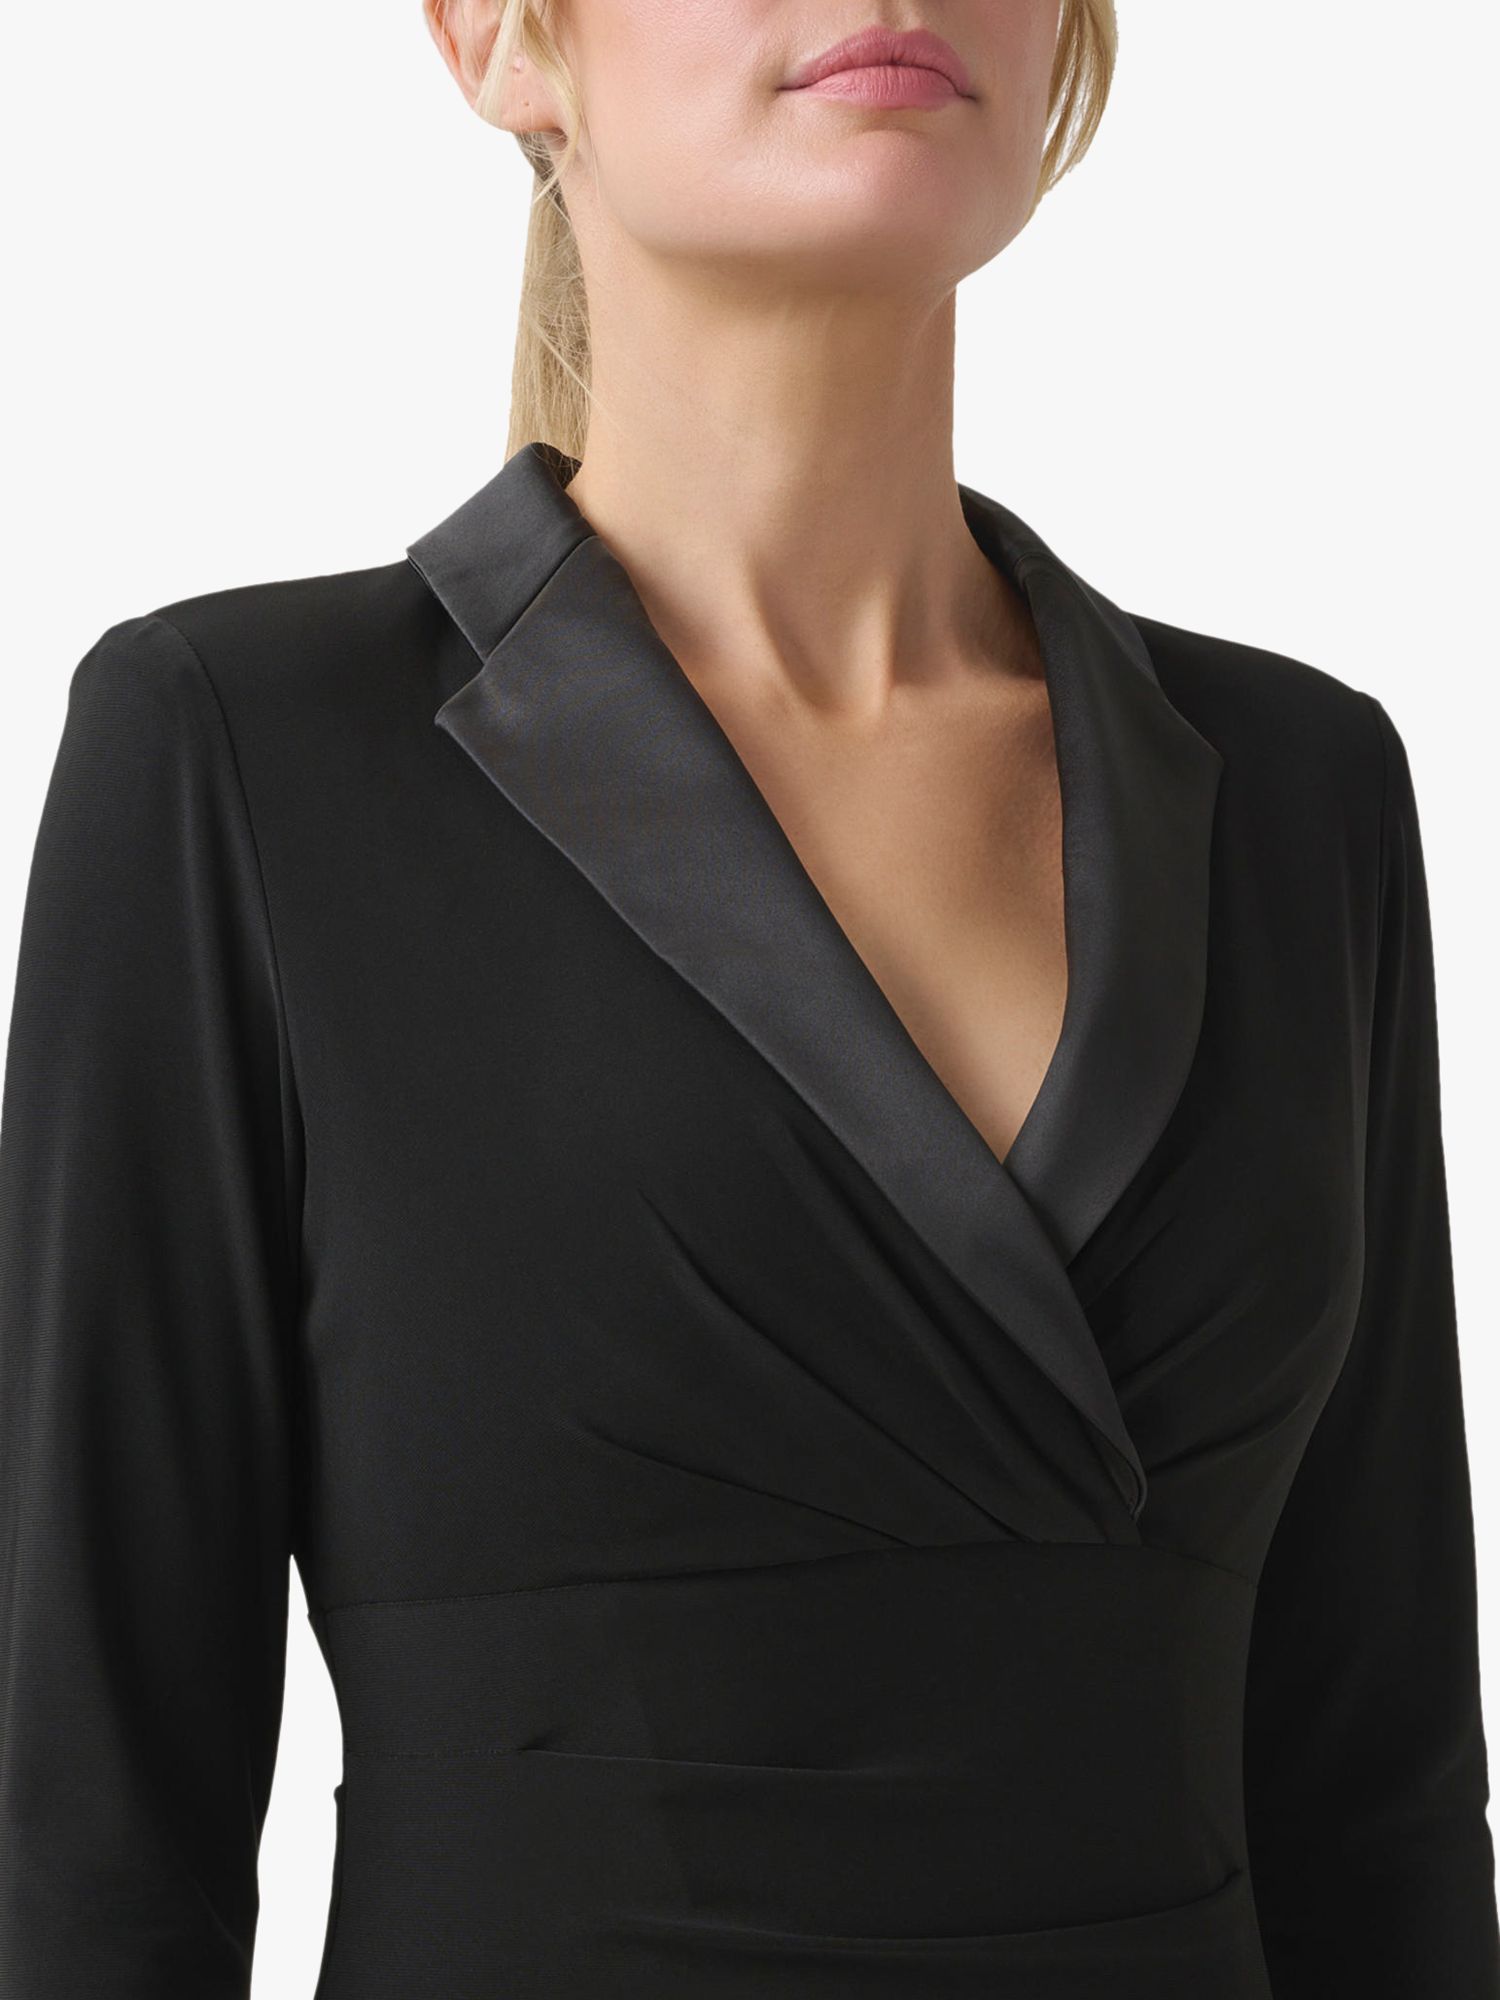 Adrianna Papell Jersey Tuxedo Dress, Black at John Lewis & Partners